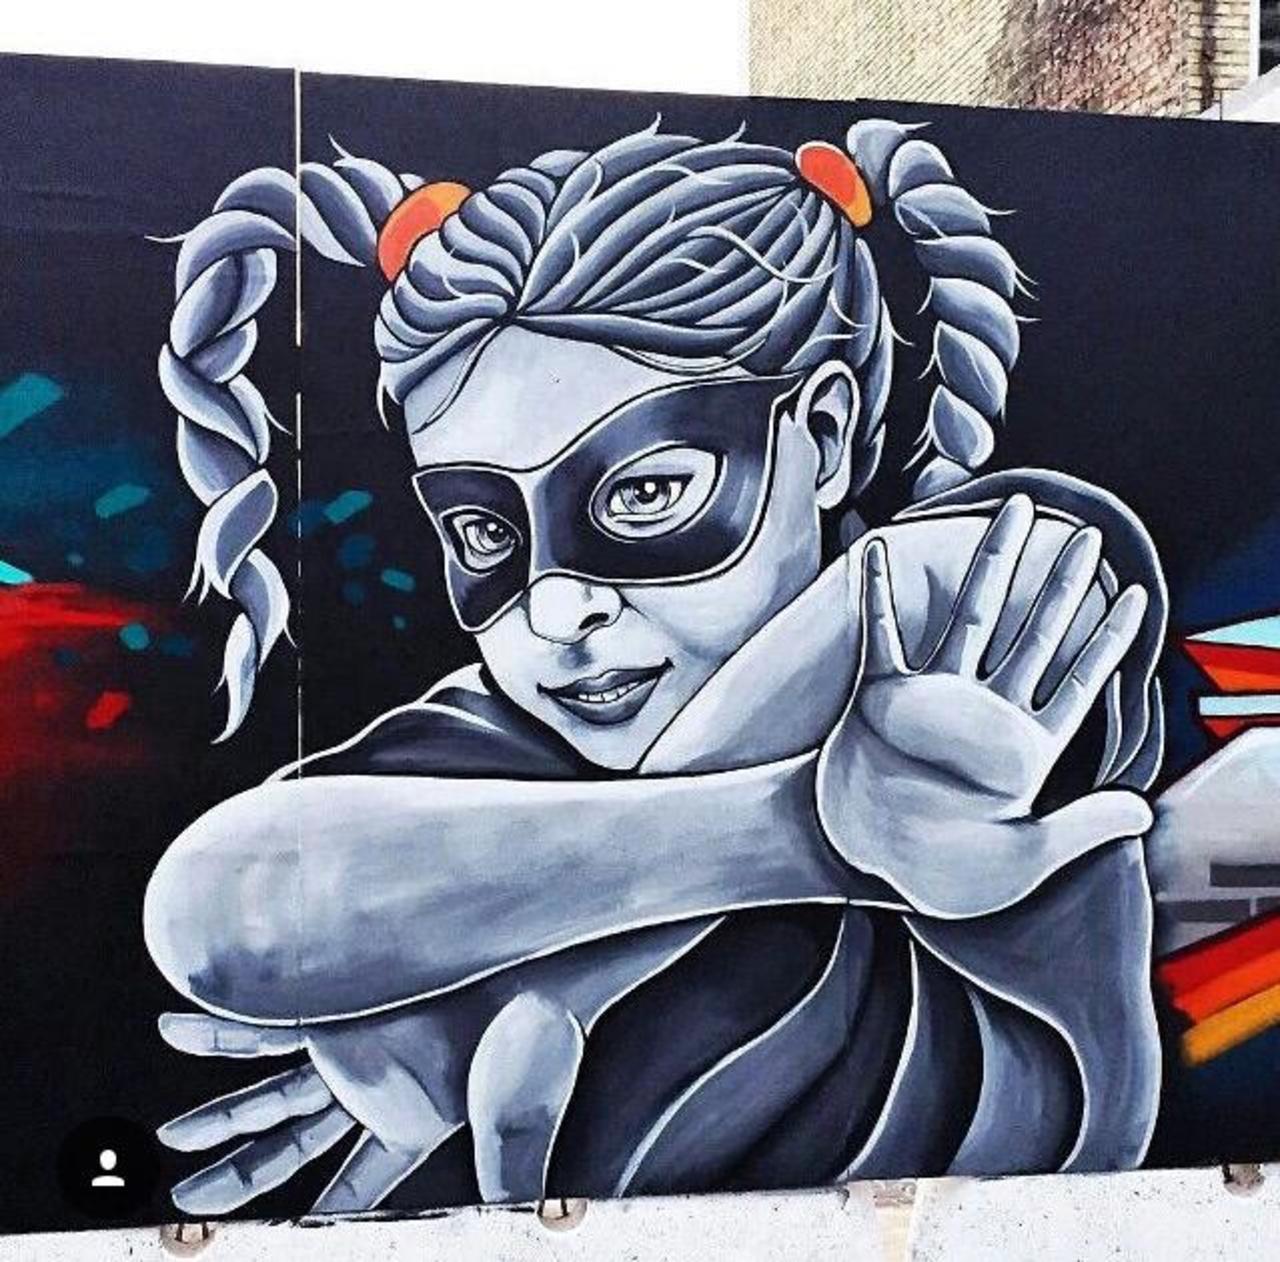 Street Art by Stinehvid 

#art #graffiti #mural #streetart http://t.co/dM6ynrzRbf